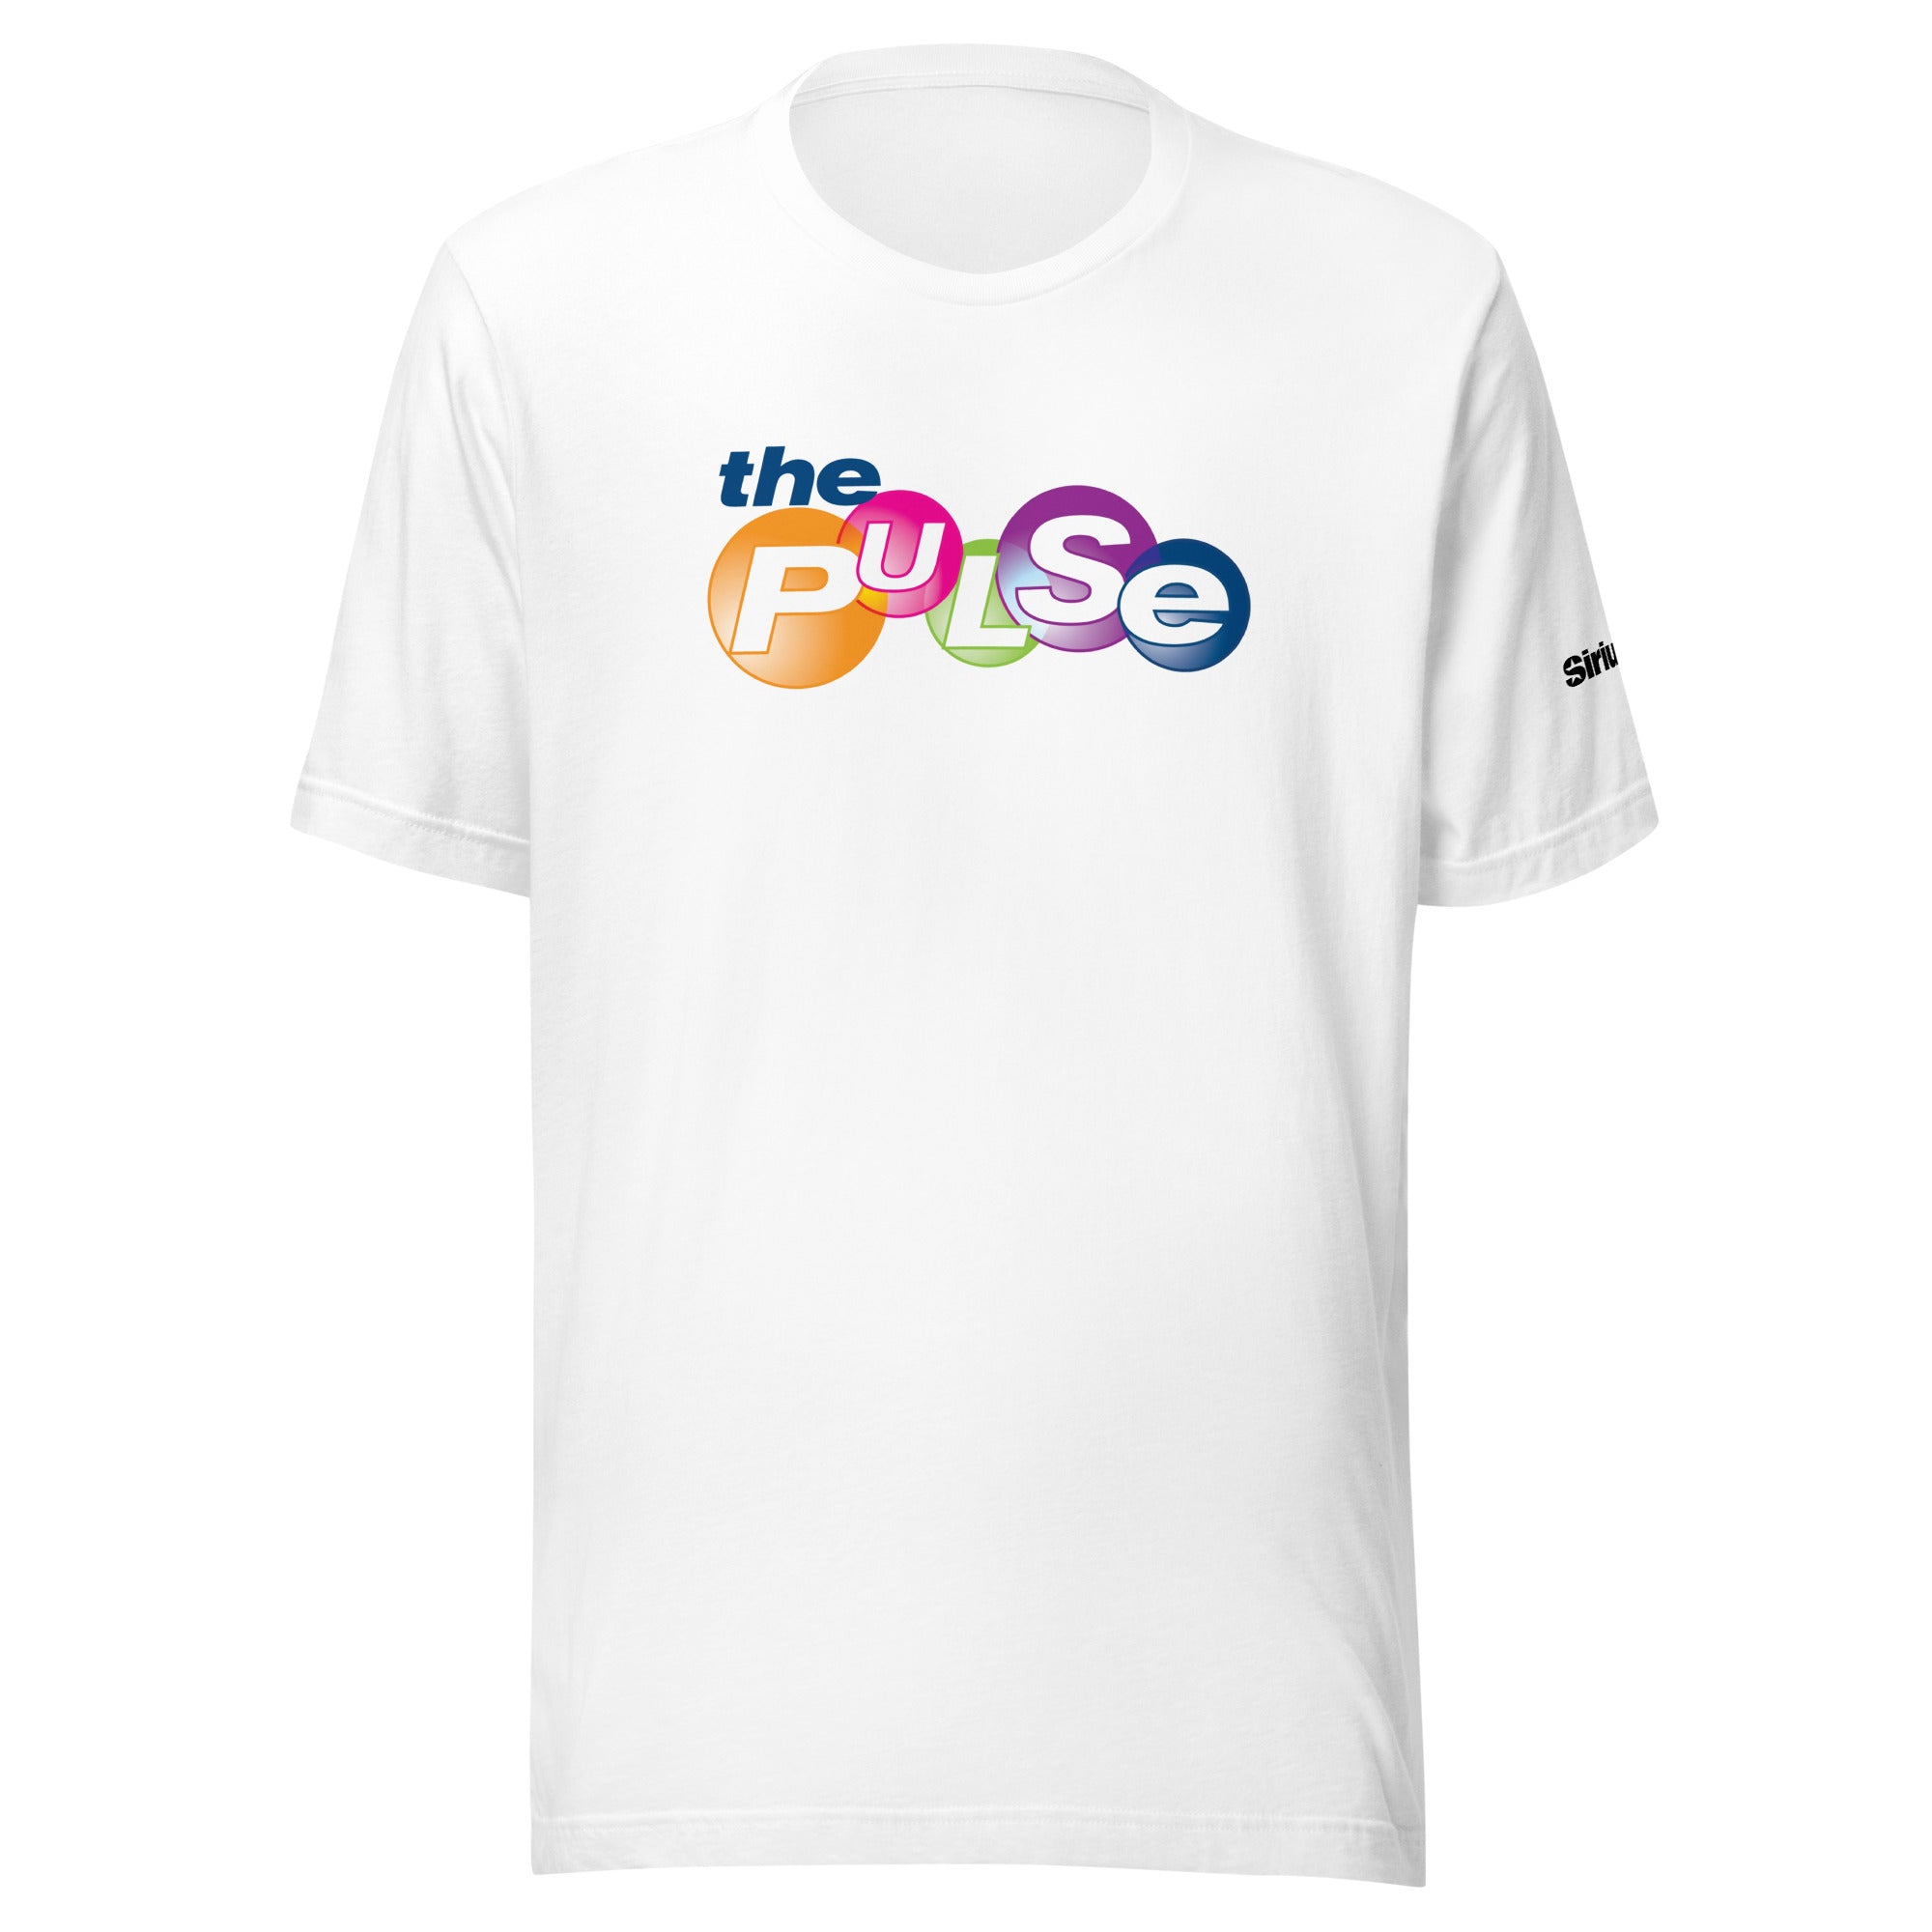 The Pulse: T-shirt (White)